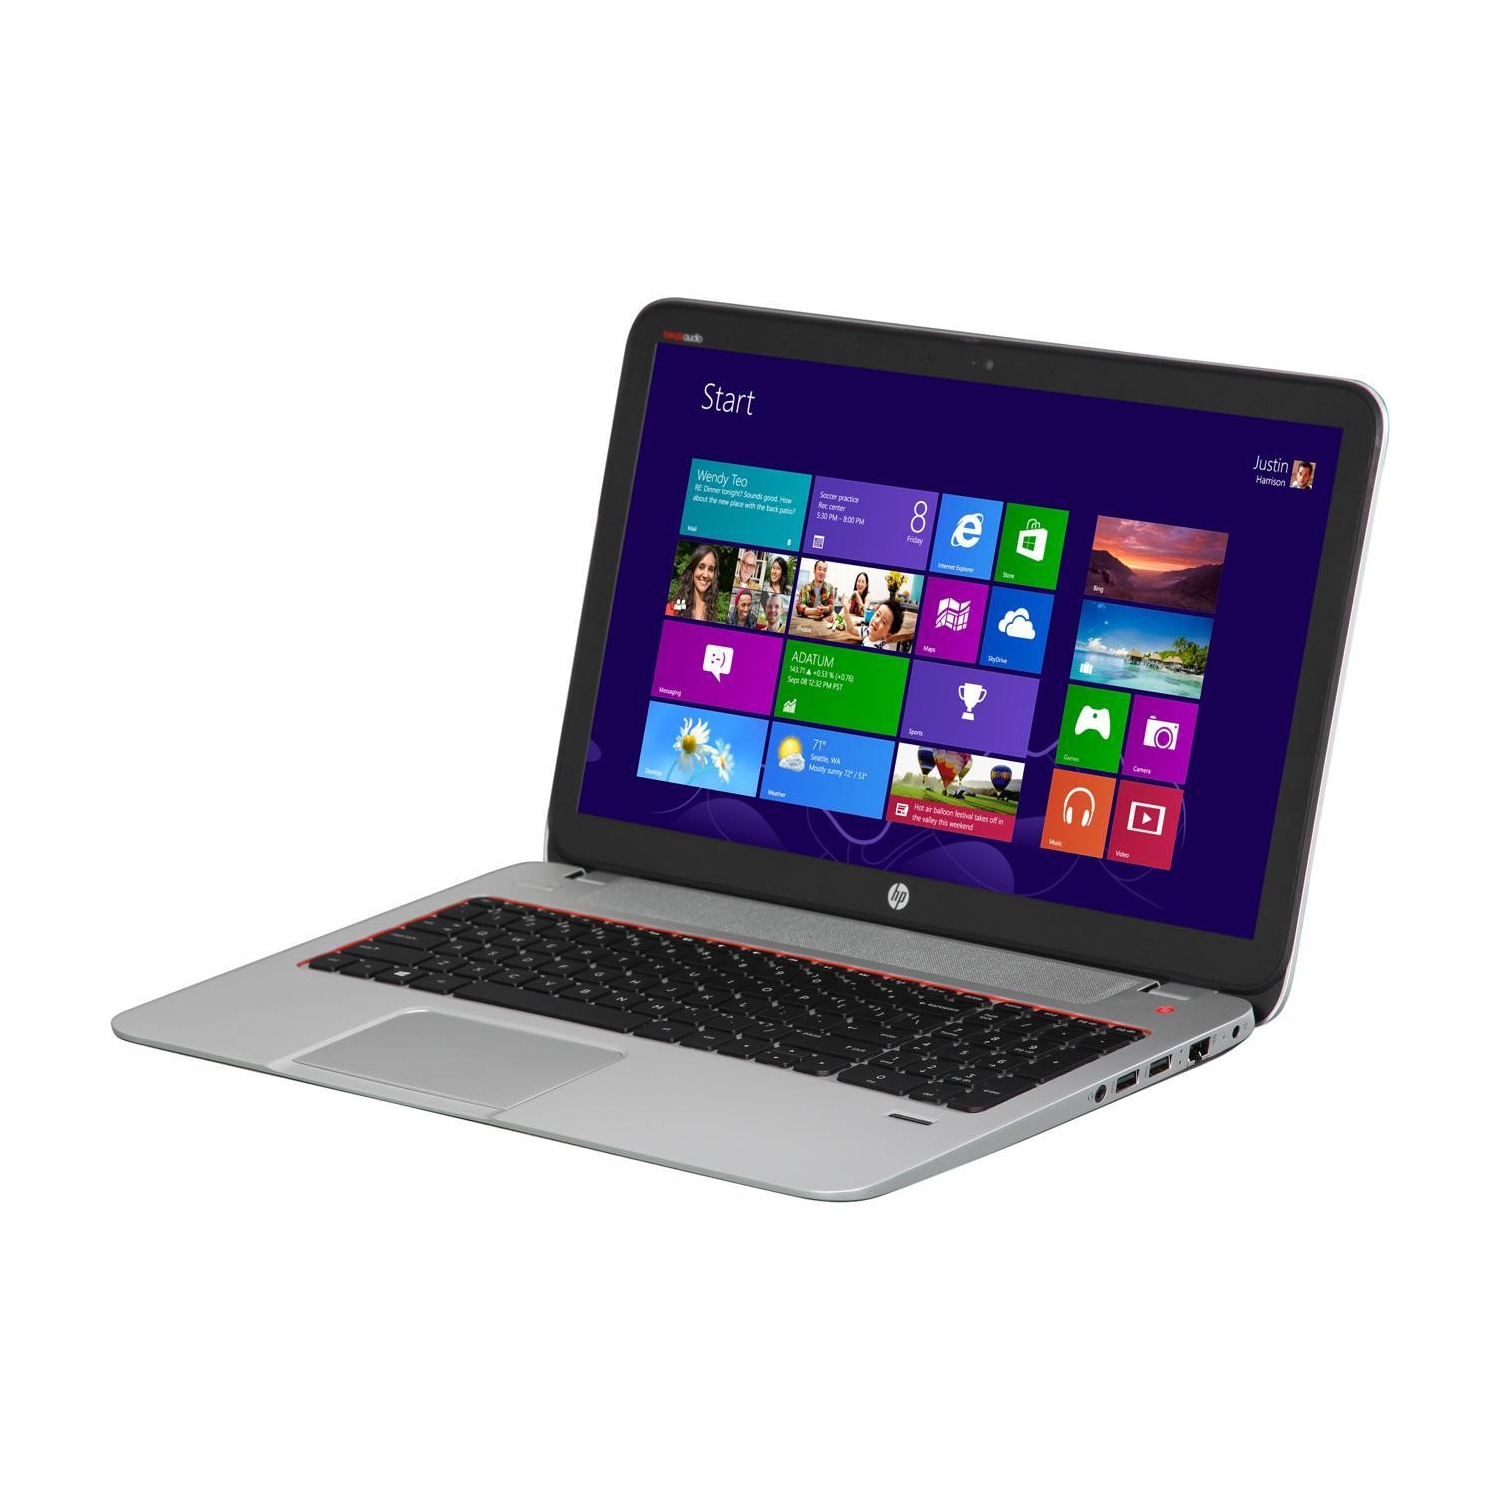 HP Envy 15-J007CL, 15.6" HD 1366 x 768p Laptop, AMD A10-5750M, 8Gb RAM, 240Gb SSD, Windows 10 (Refurbished)